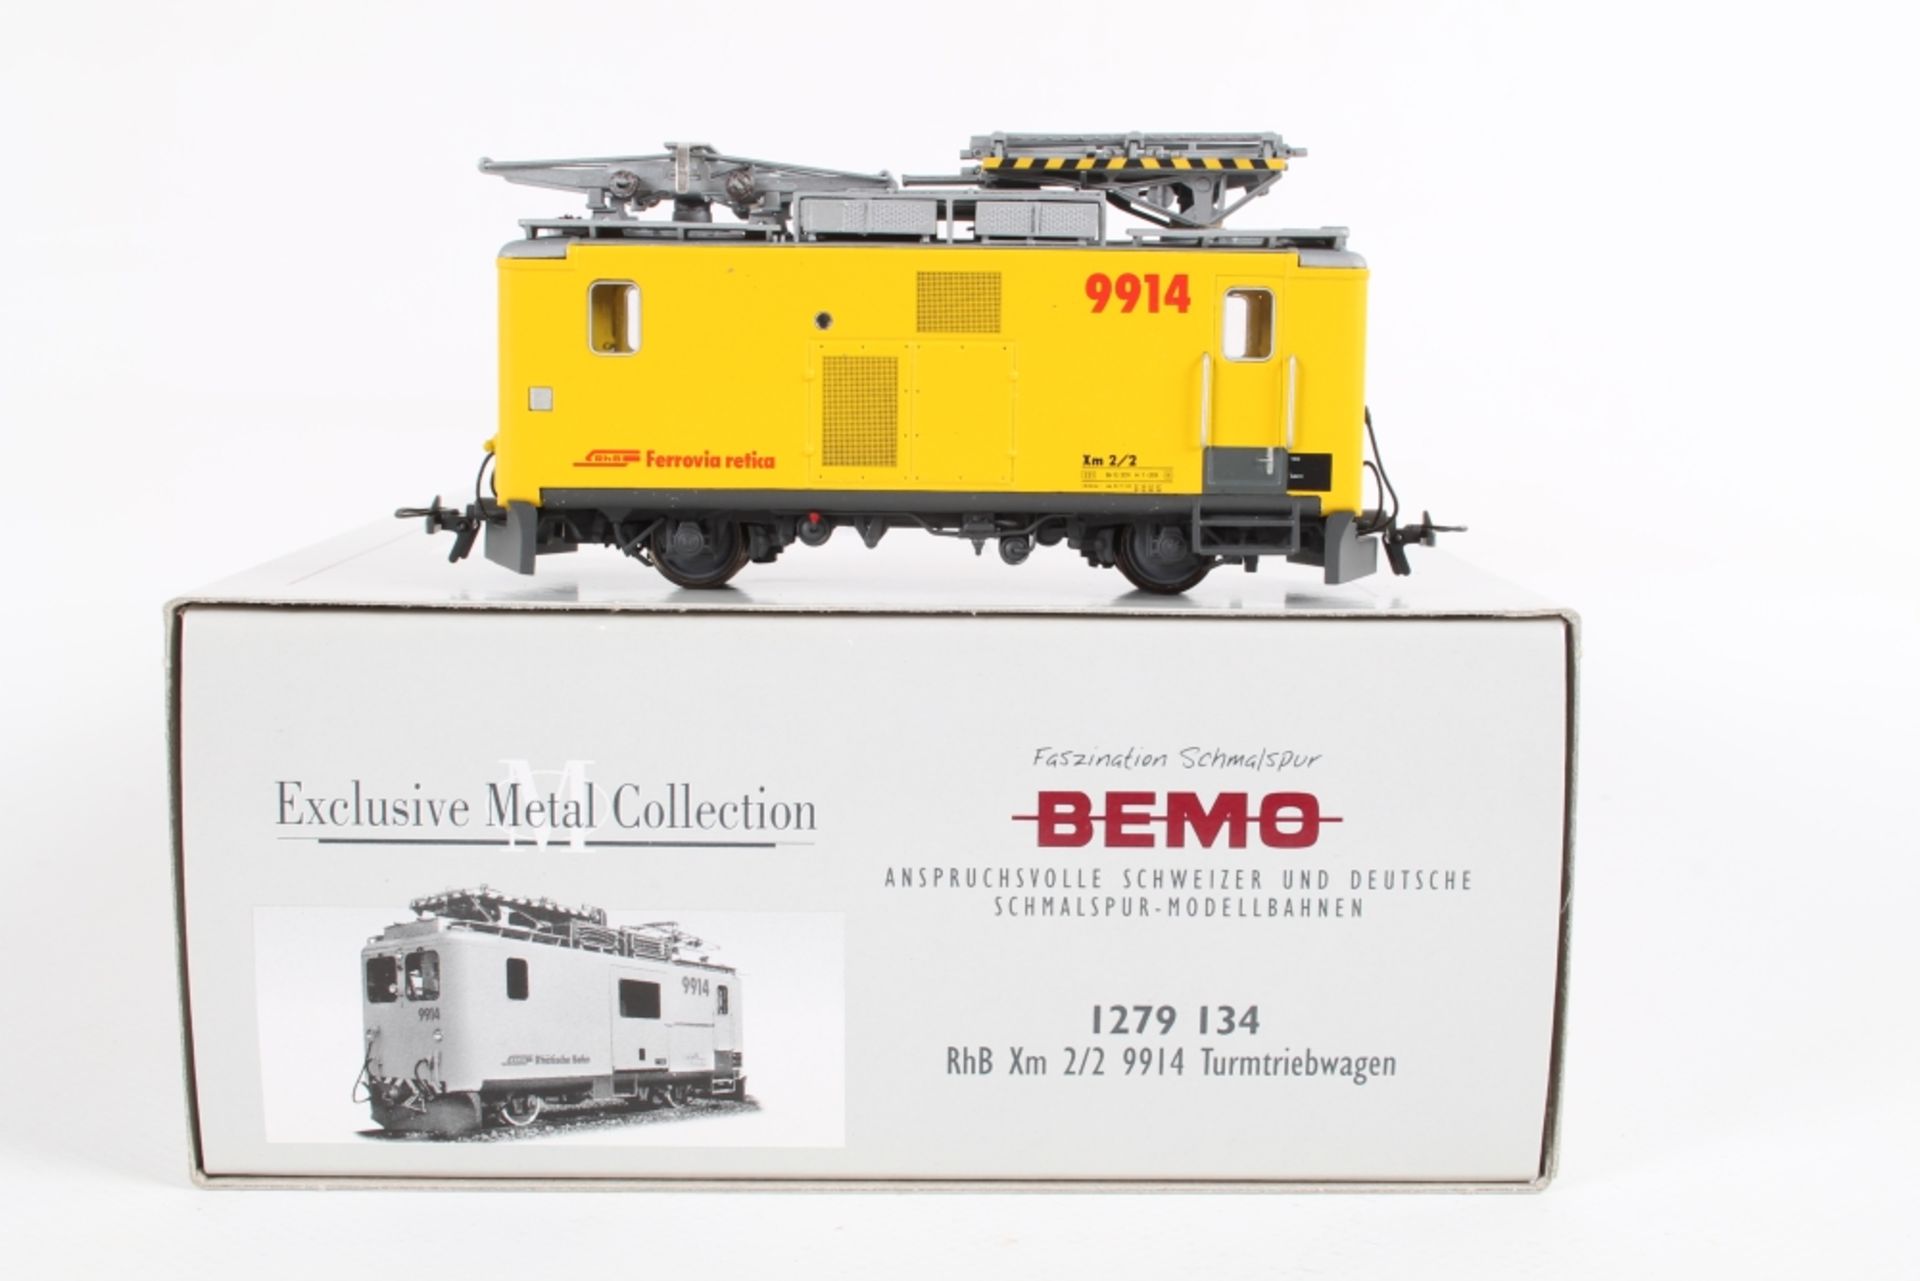 Bemo Exclusiv Metal Collection, 1279 134 - Bild 2 aus 2